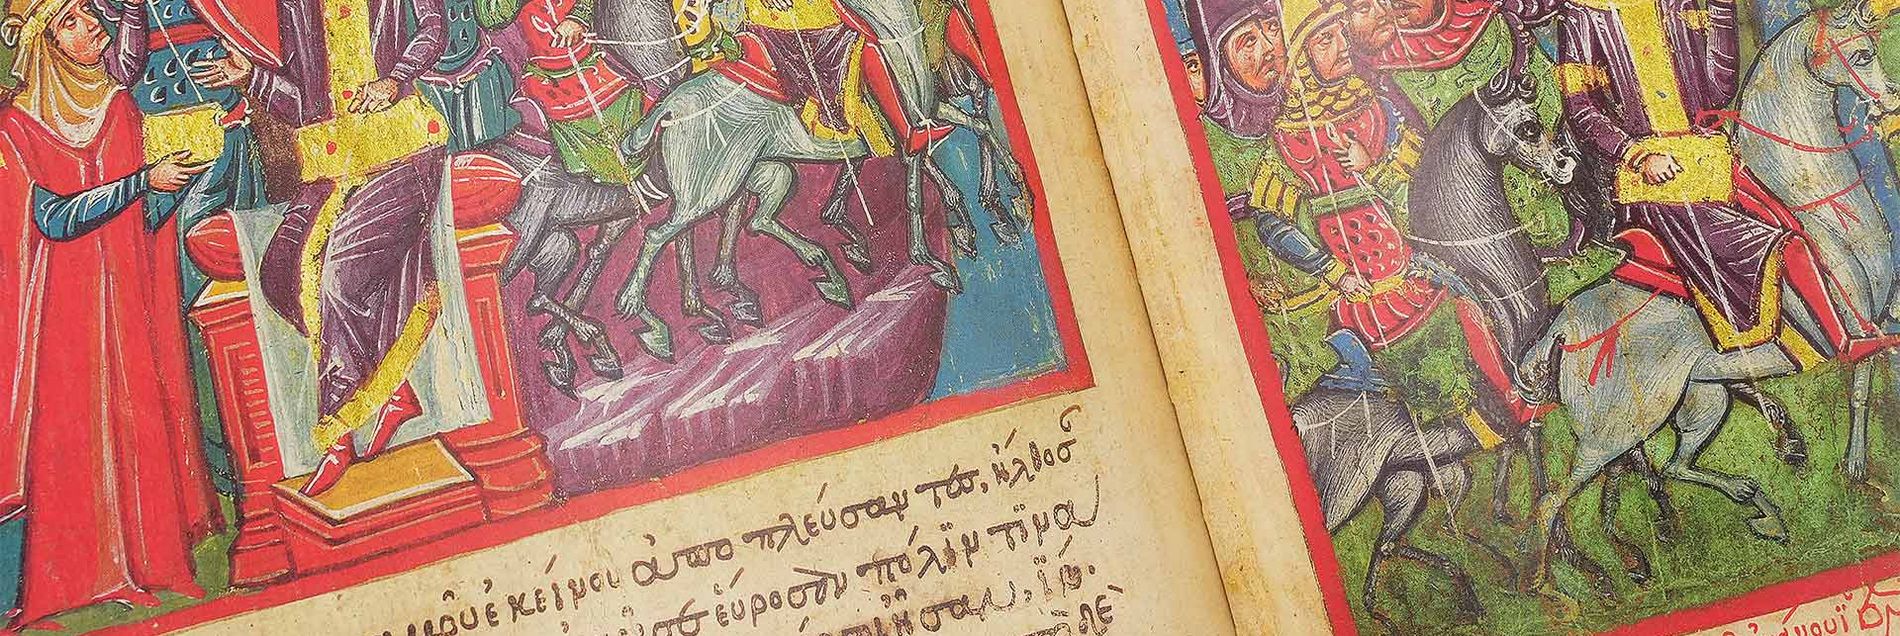 <i>“A literary bestseller as political propaganda for Emperor Alexios III of Trapezunt”</i>